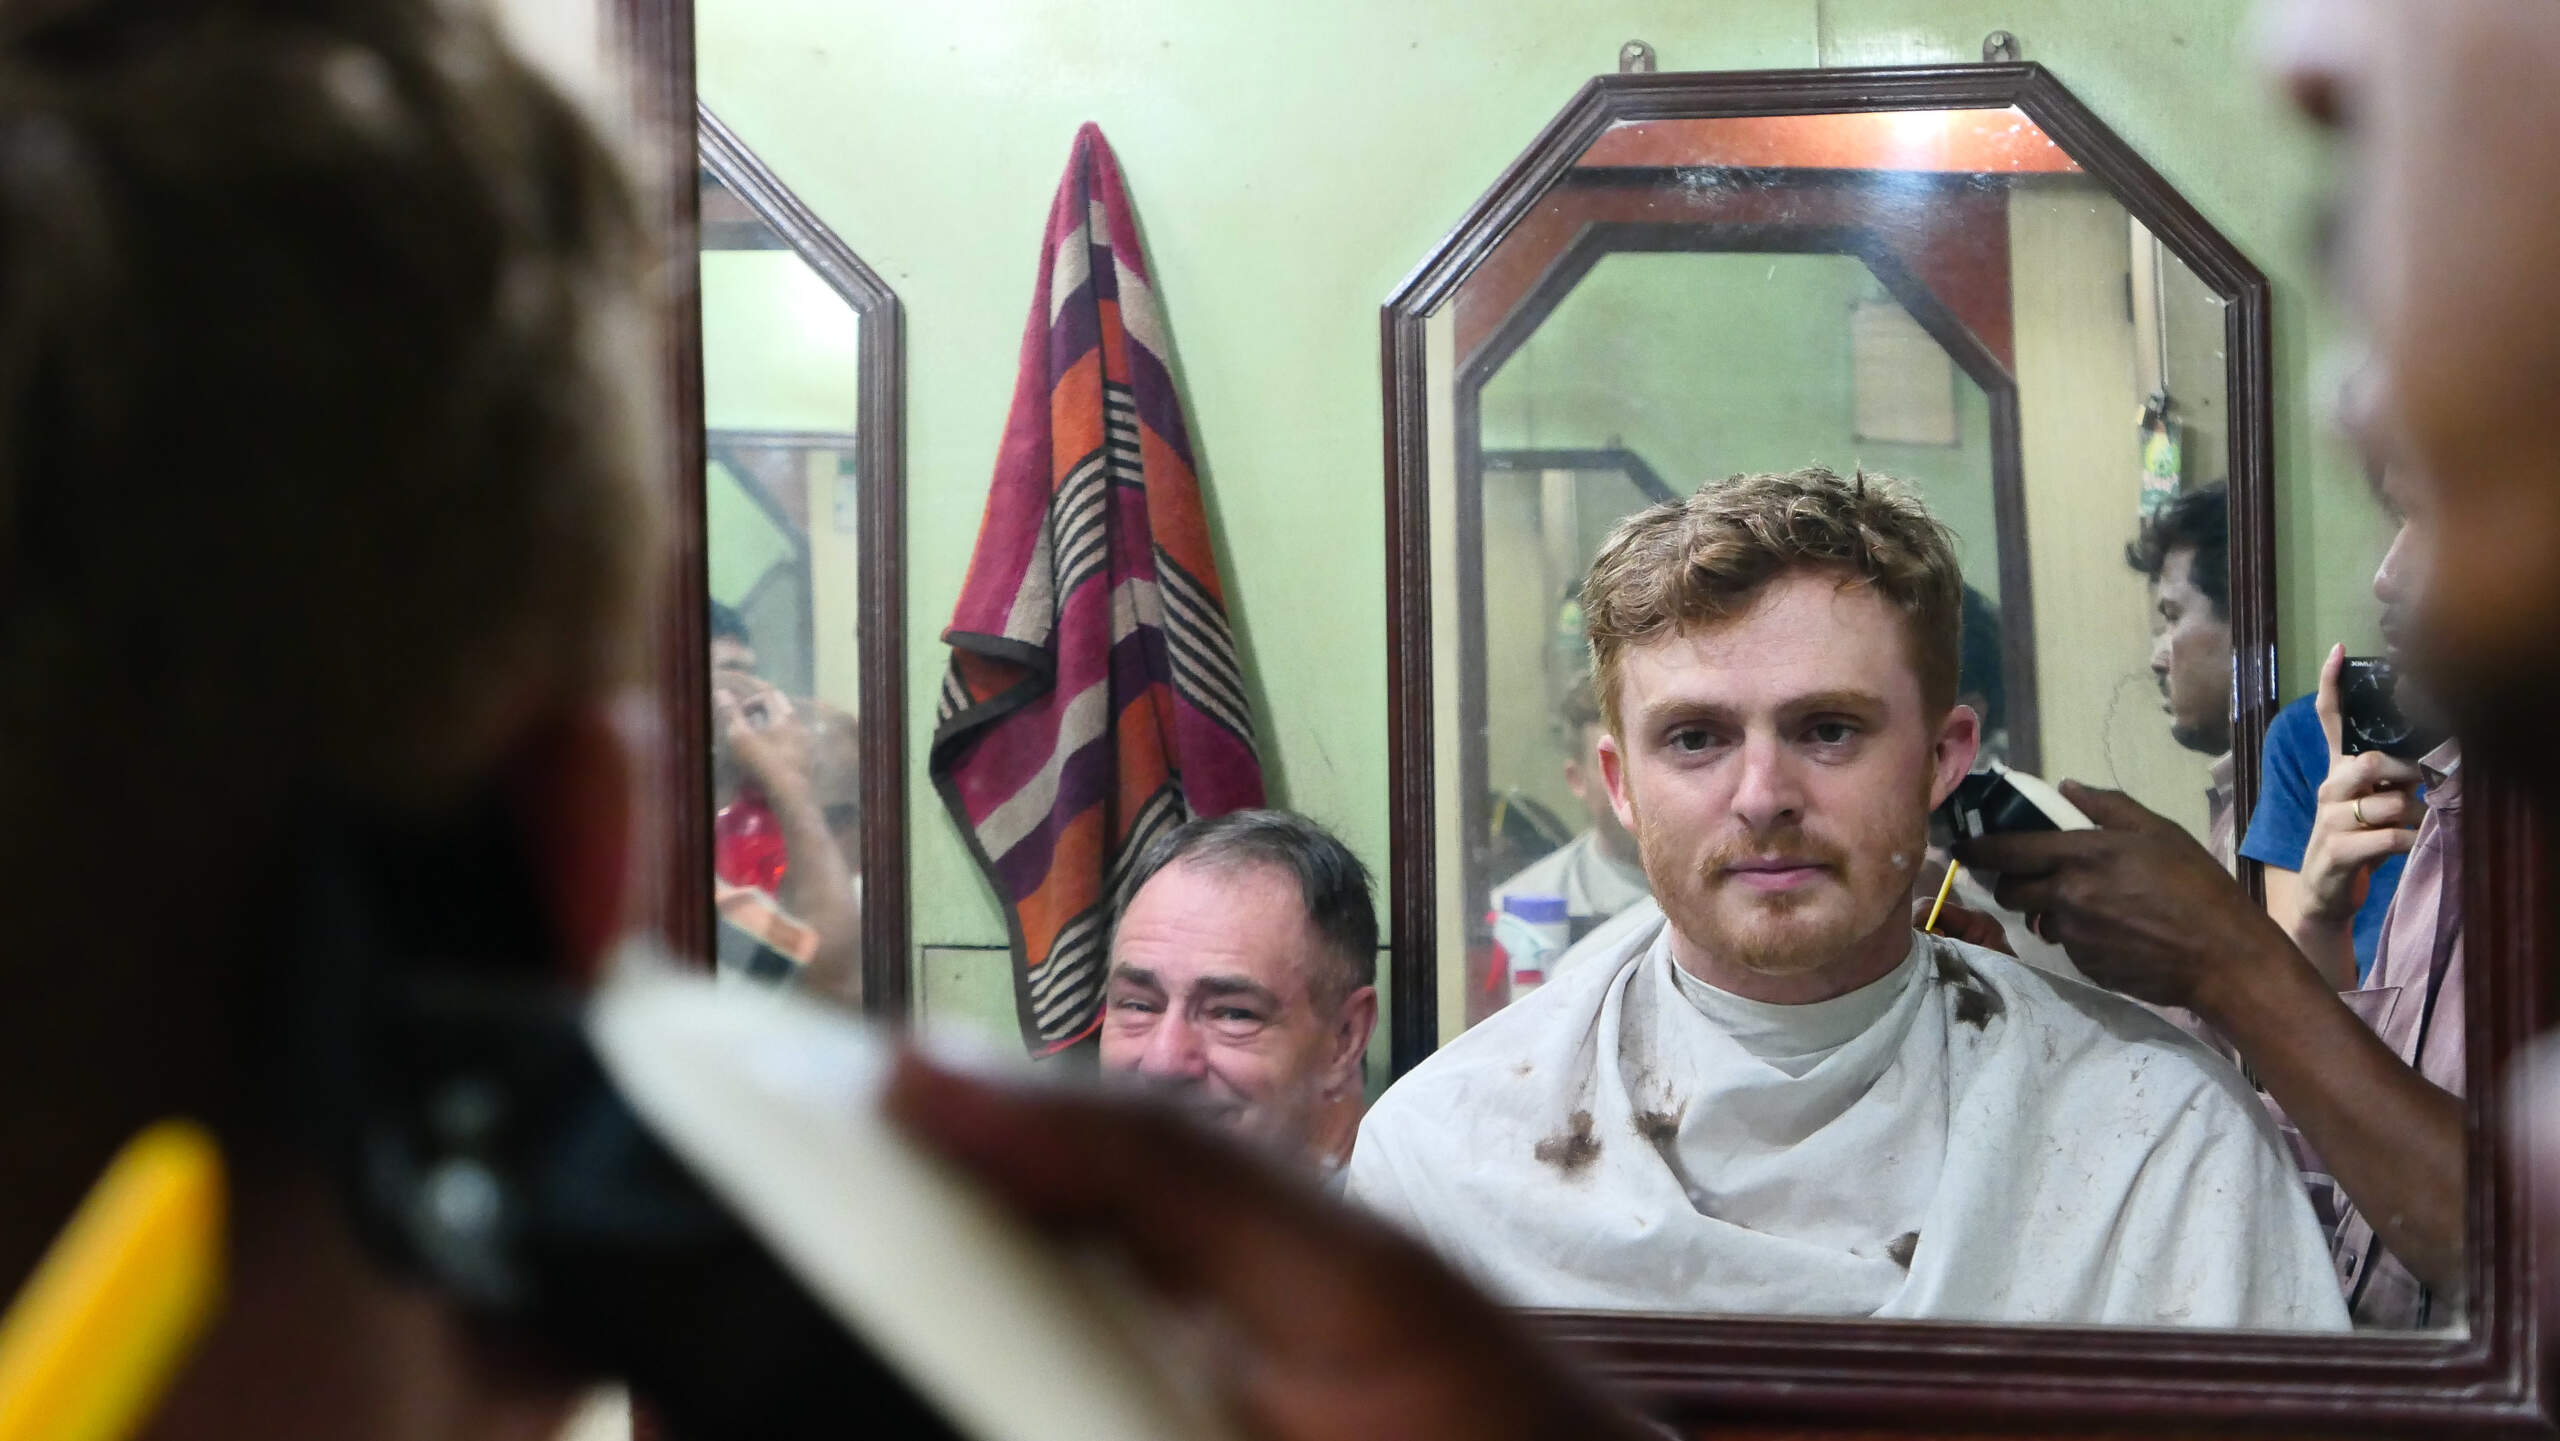 Nomadic Samuel getting a haircut and shave at a barbershop in Kolkata, India